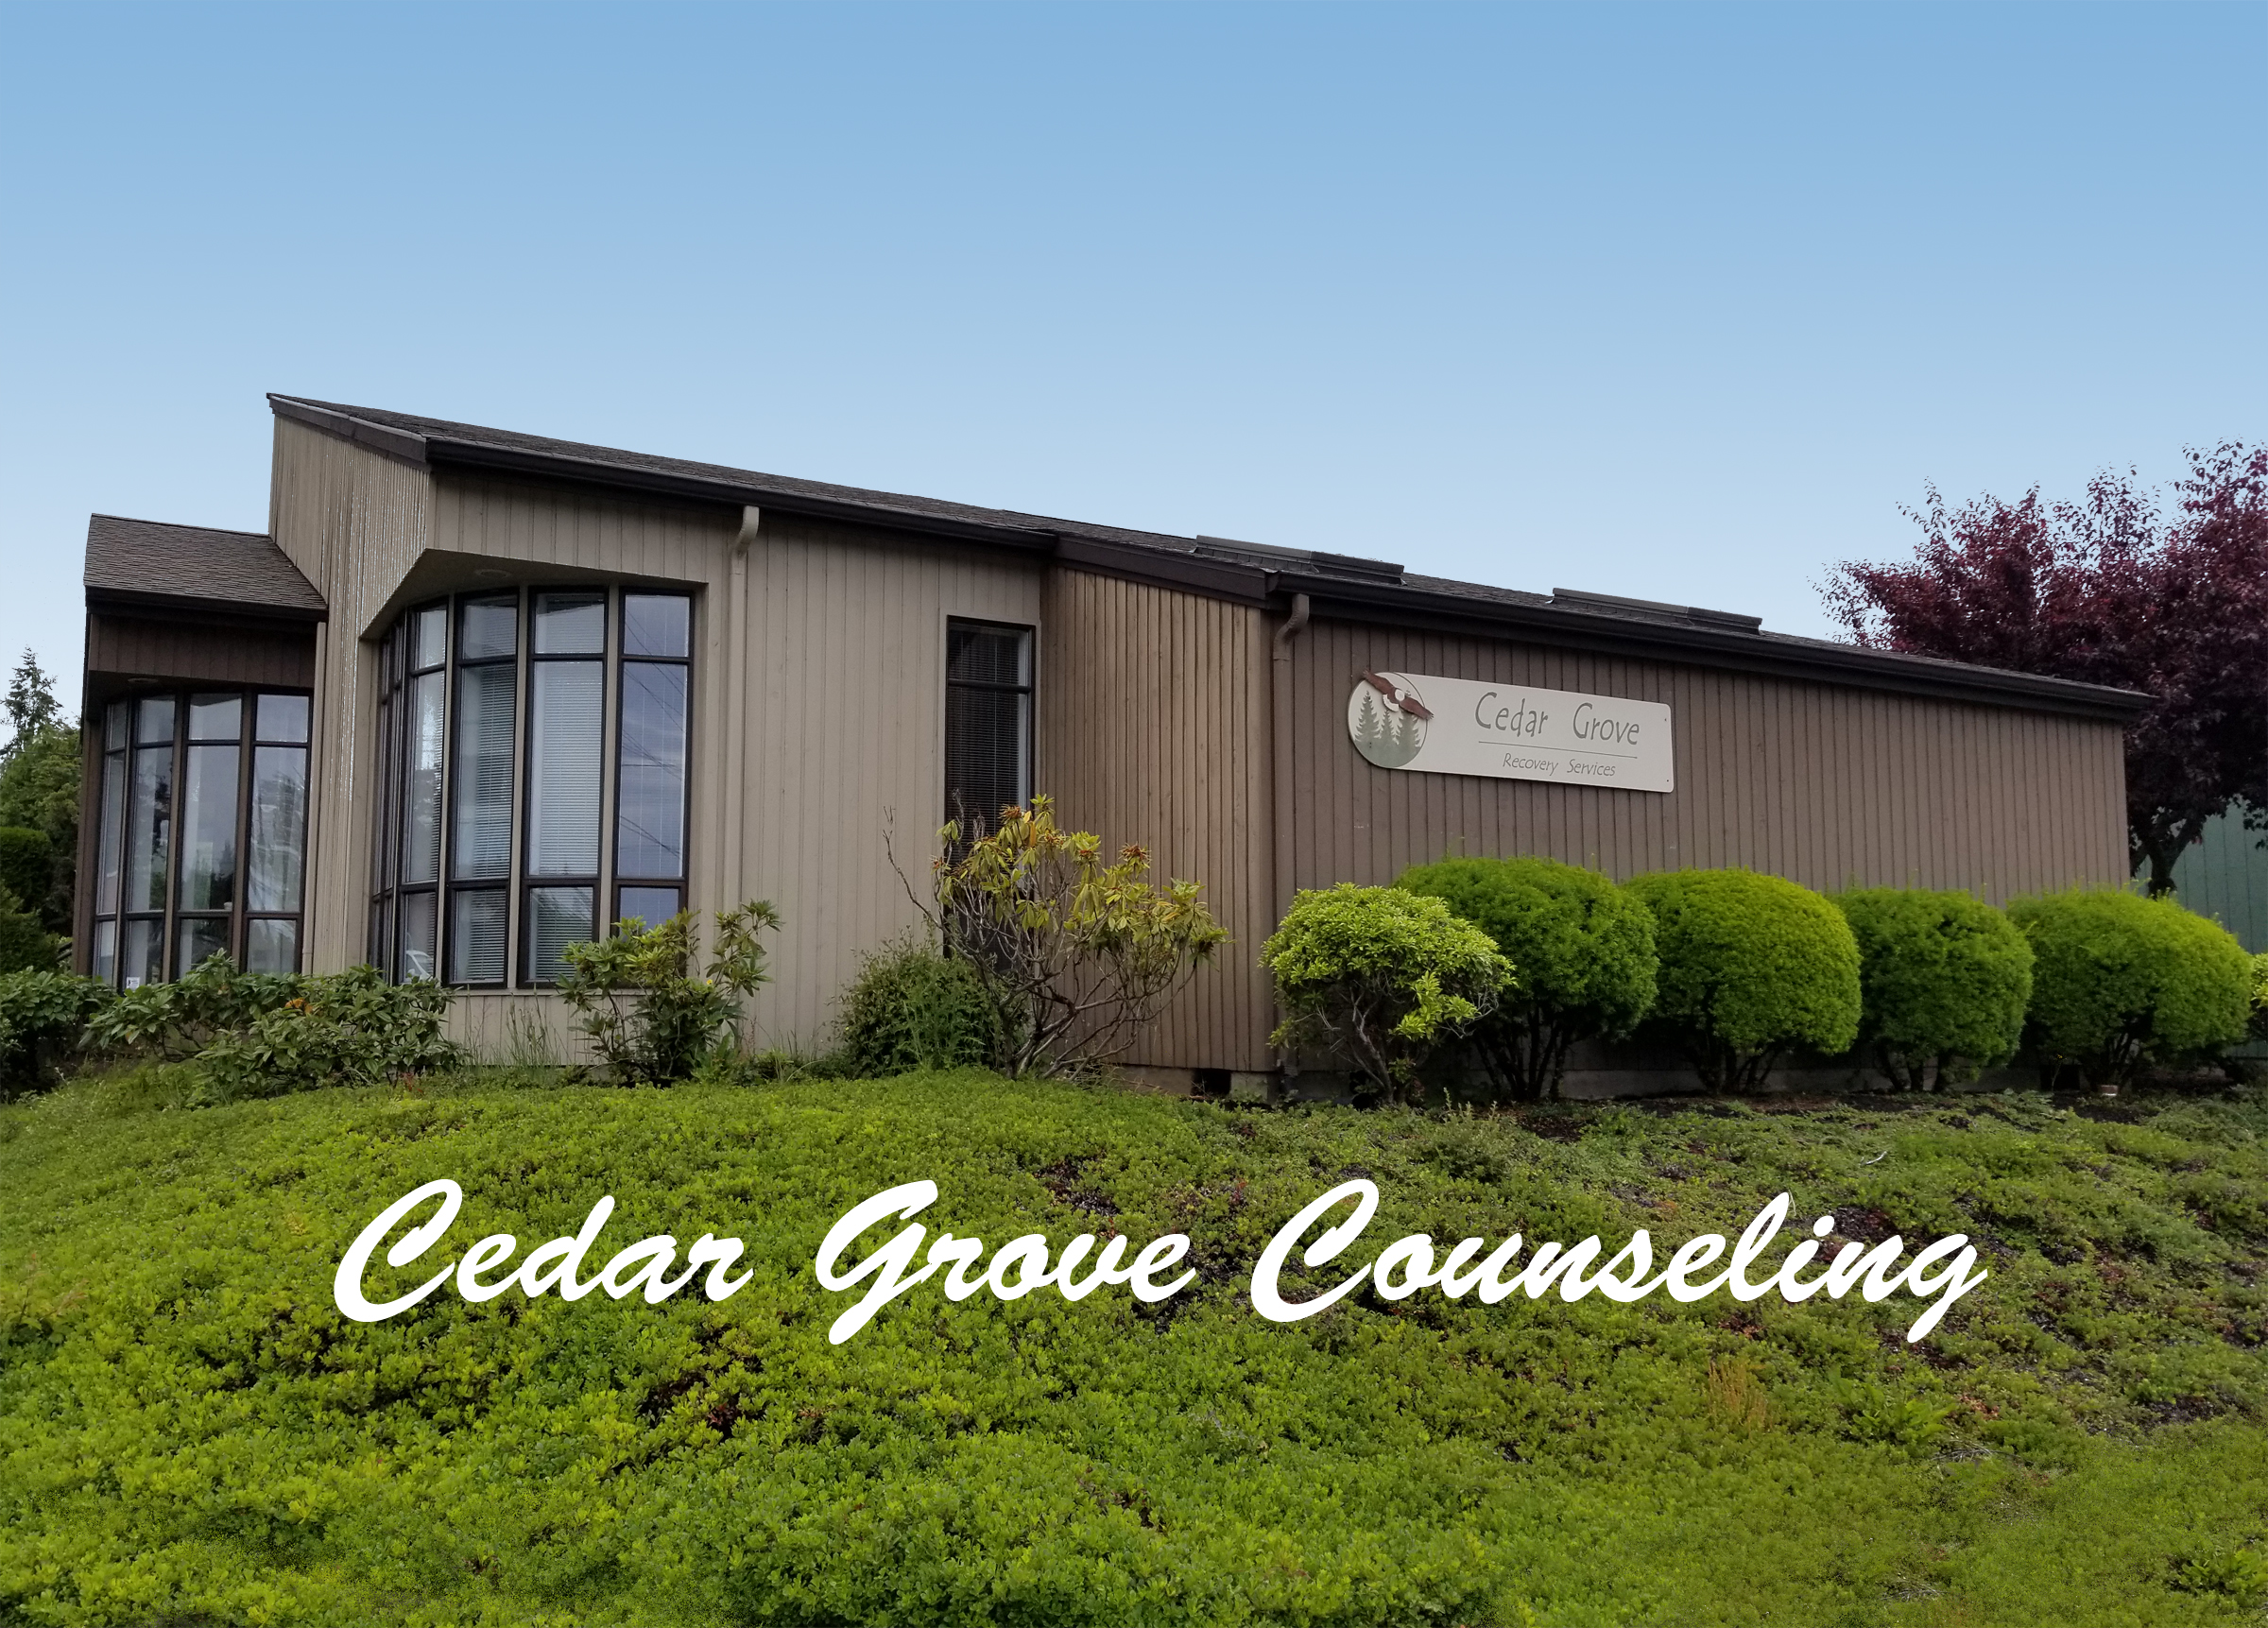 Cedar Grove Counseling